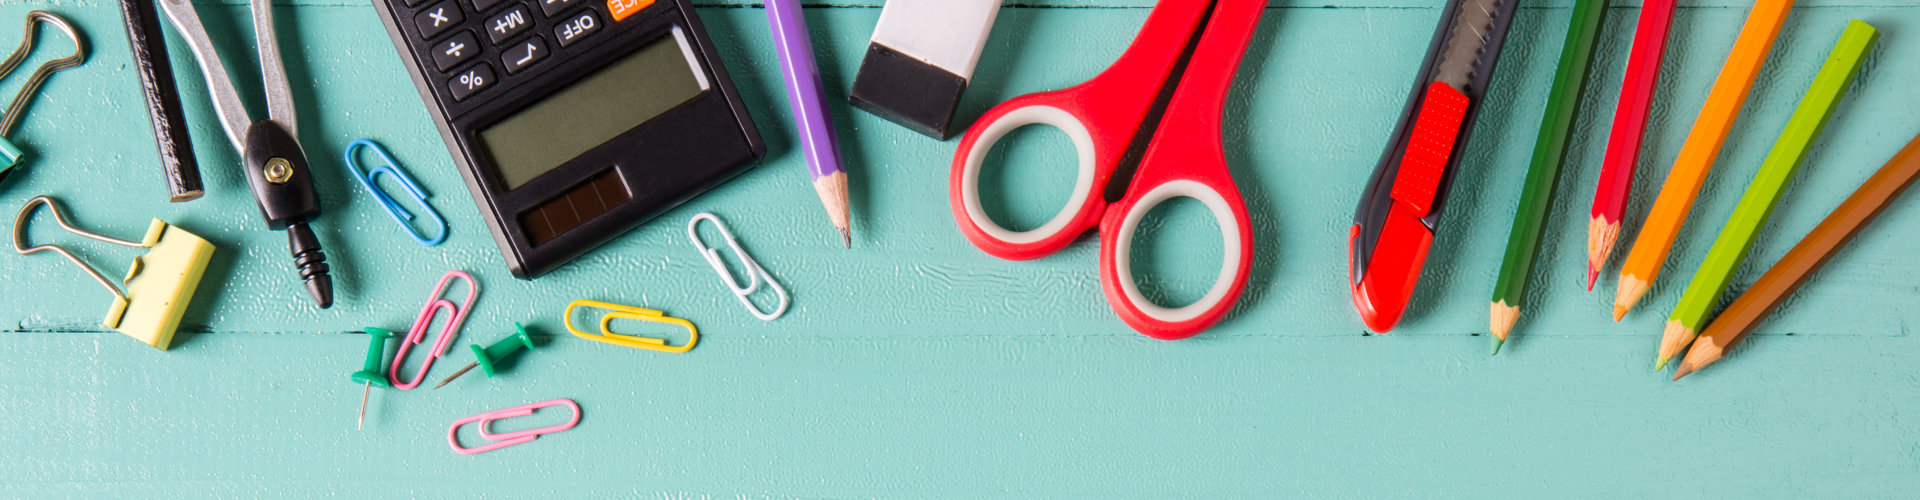 colored pencils, calculator, pen, clip, scissors